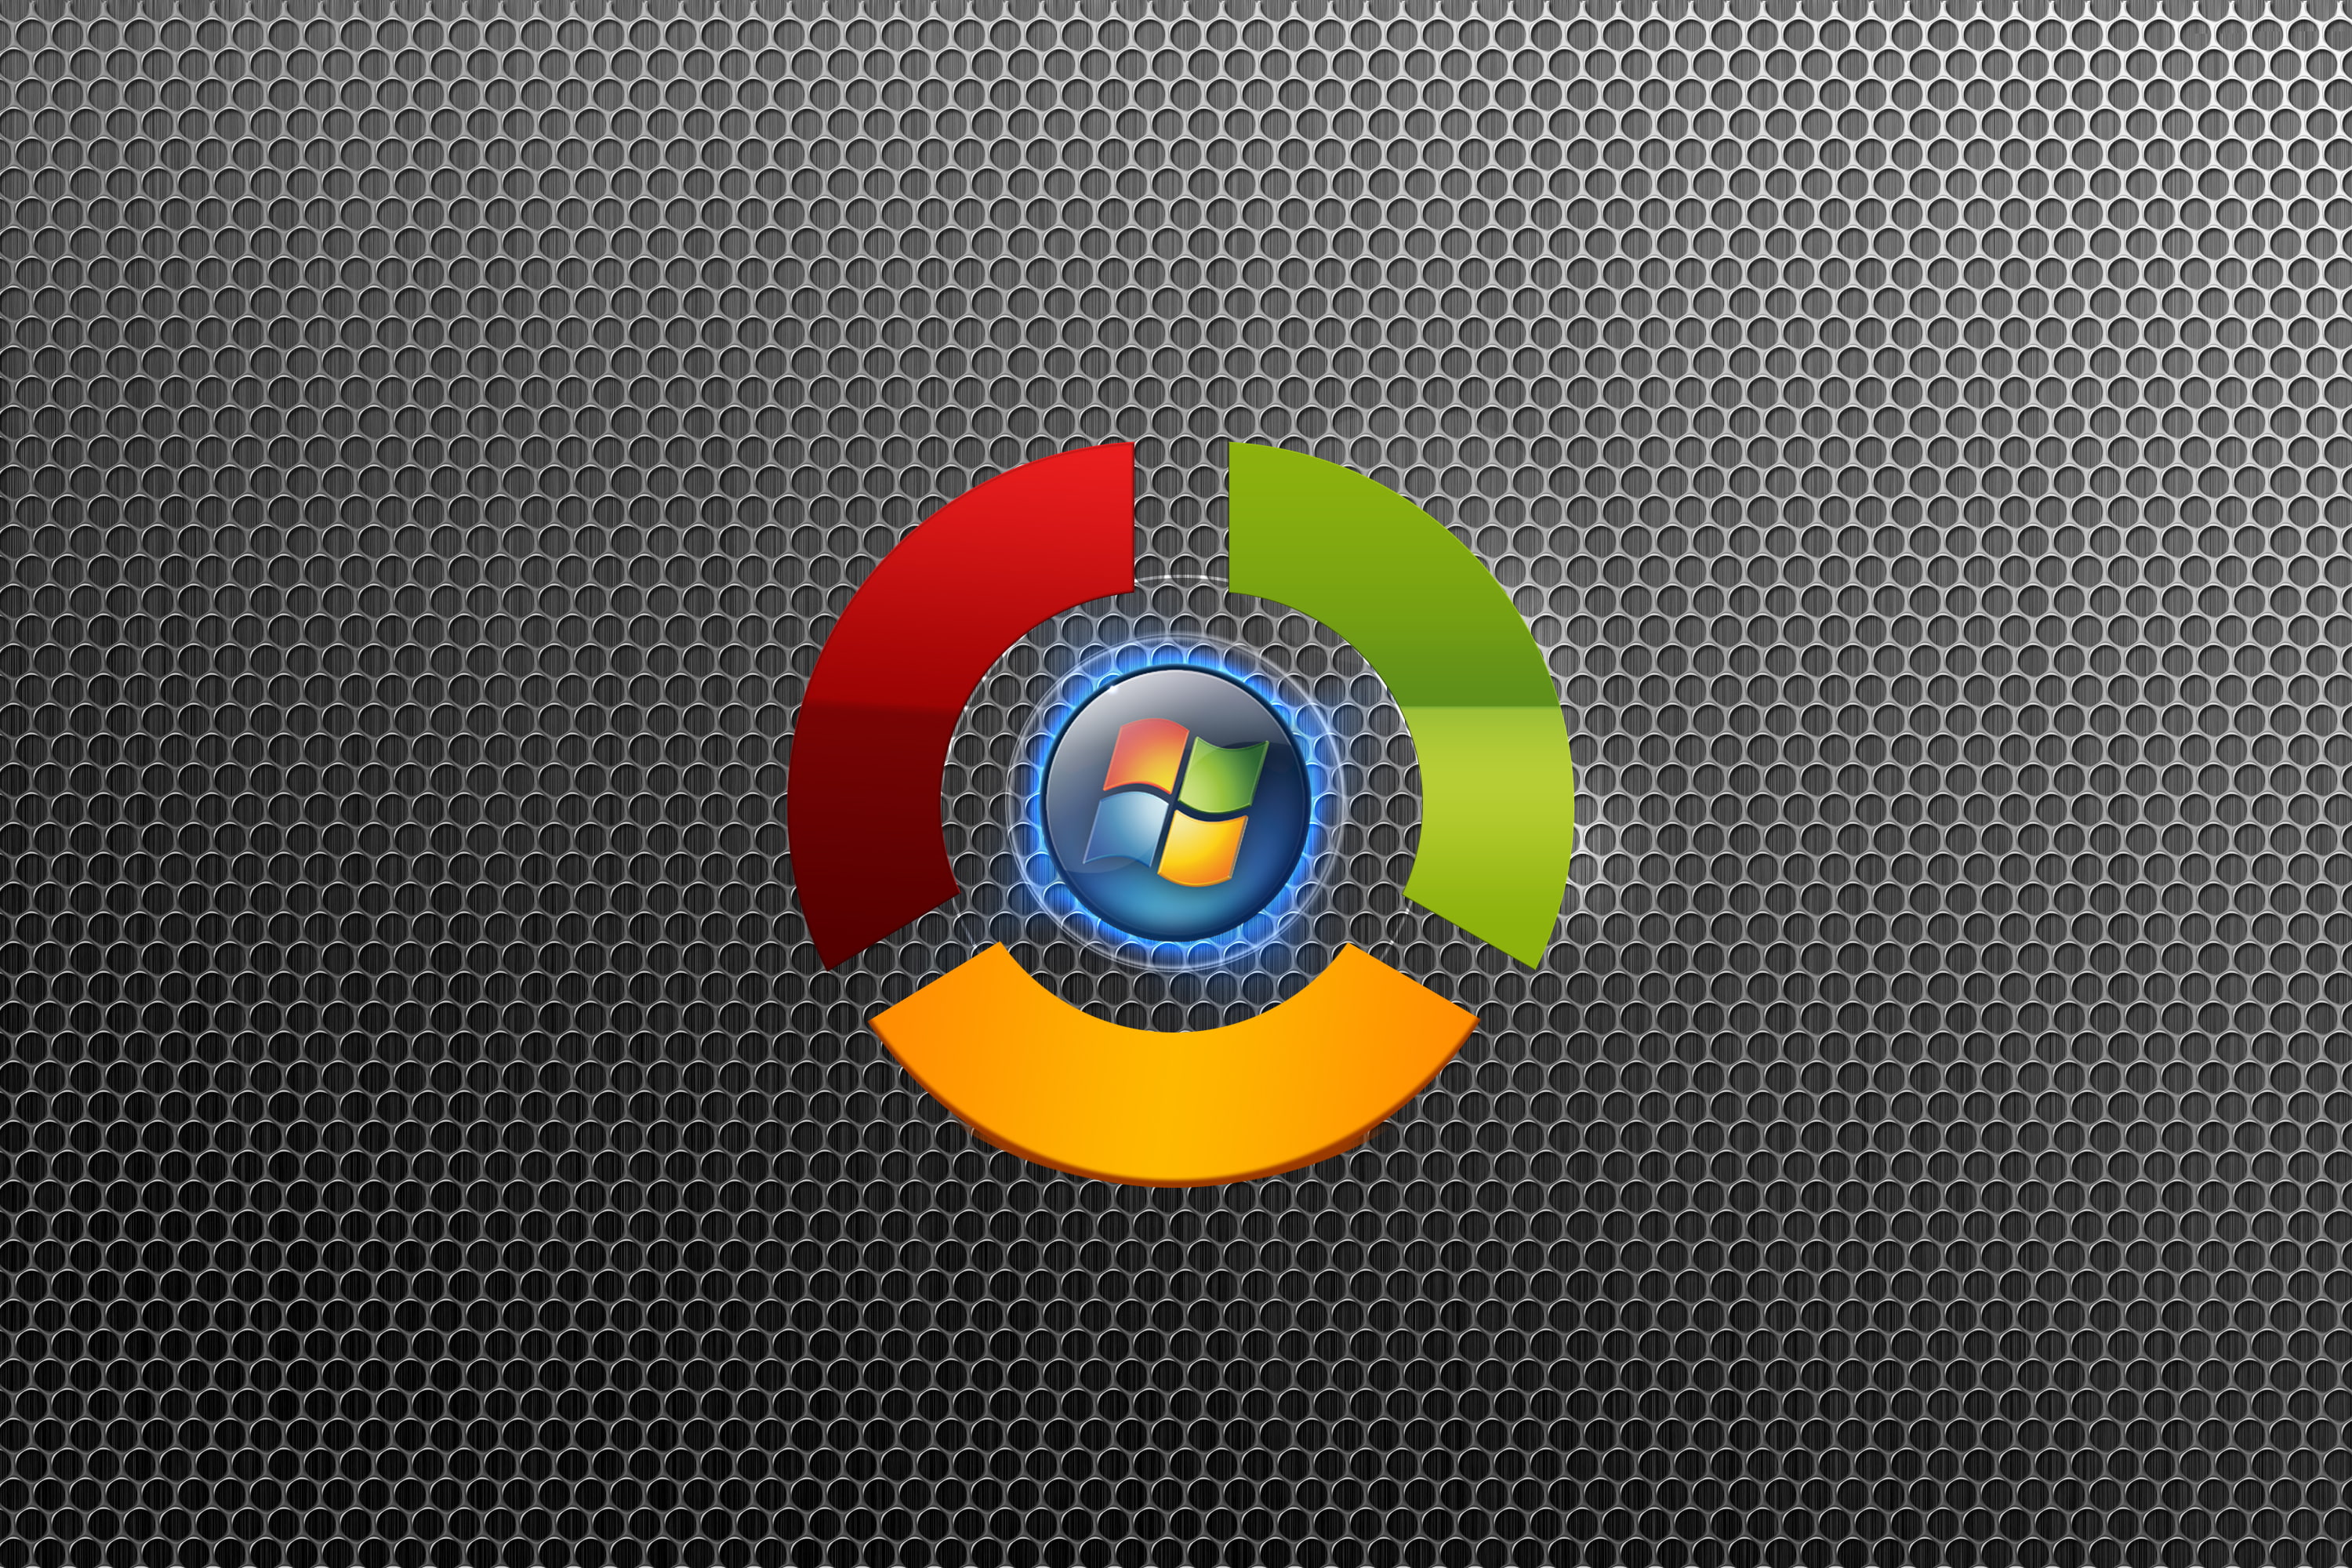 Microsoft Windows 7 logo, computer, texture, emblem, Google, browser